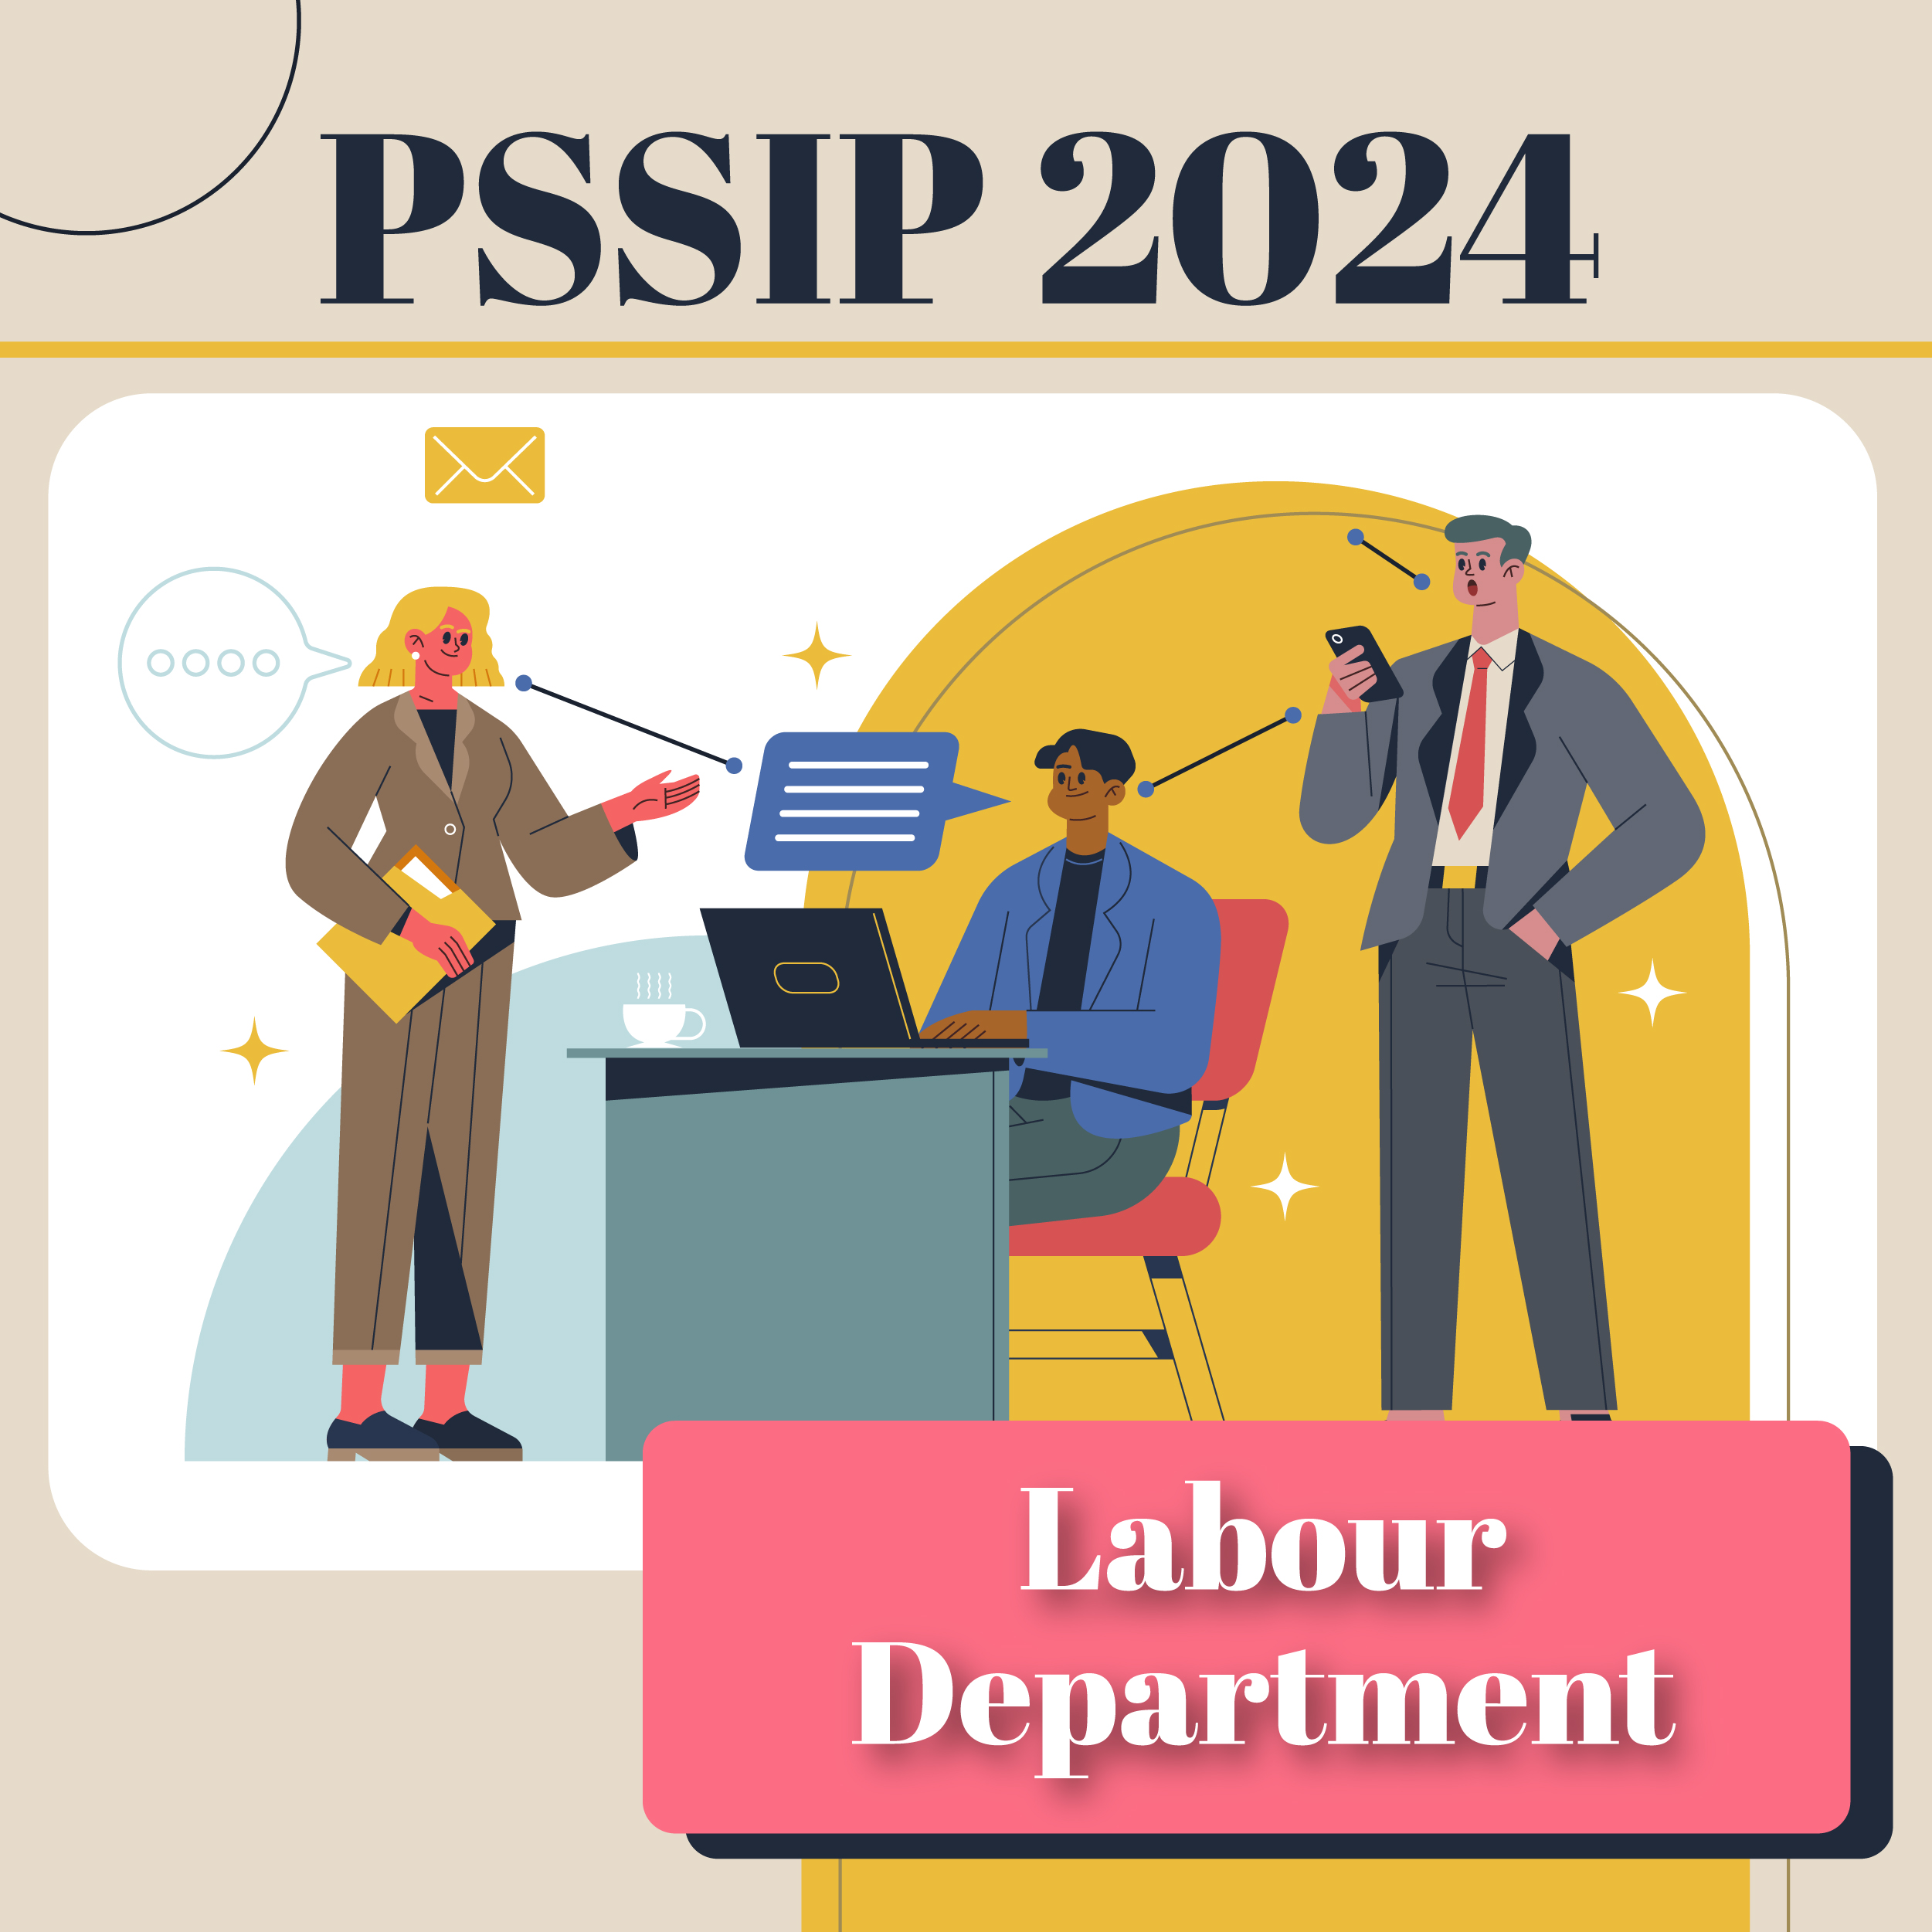 PSSIP2024 – Labour Department